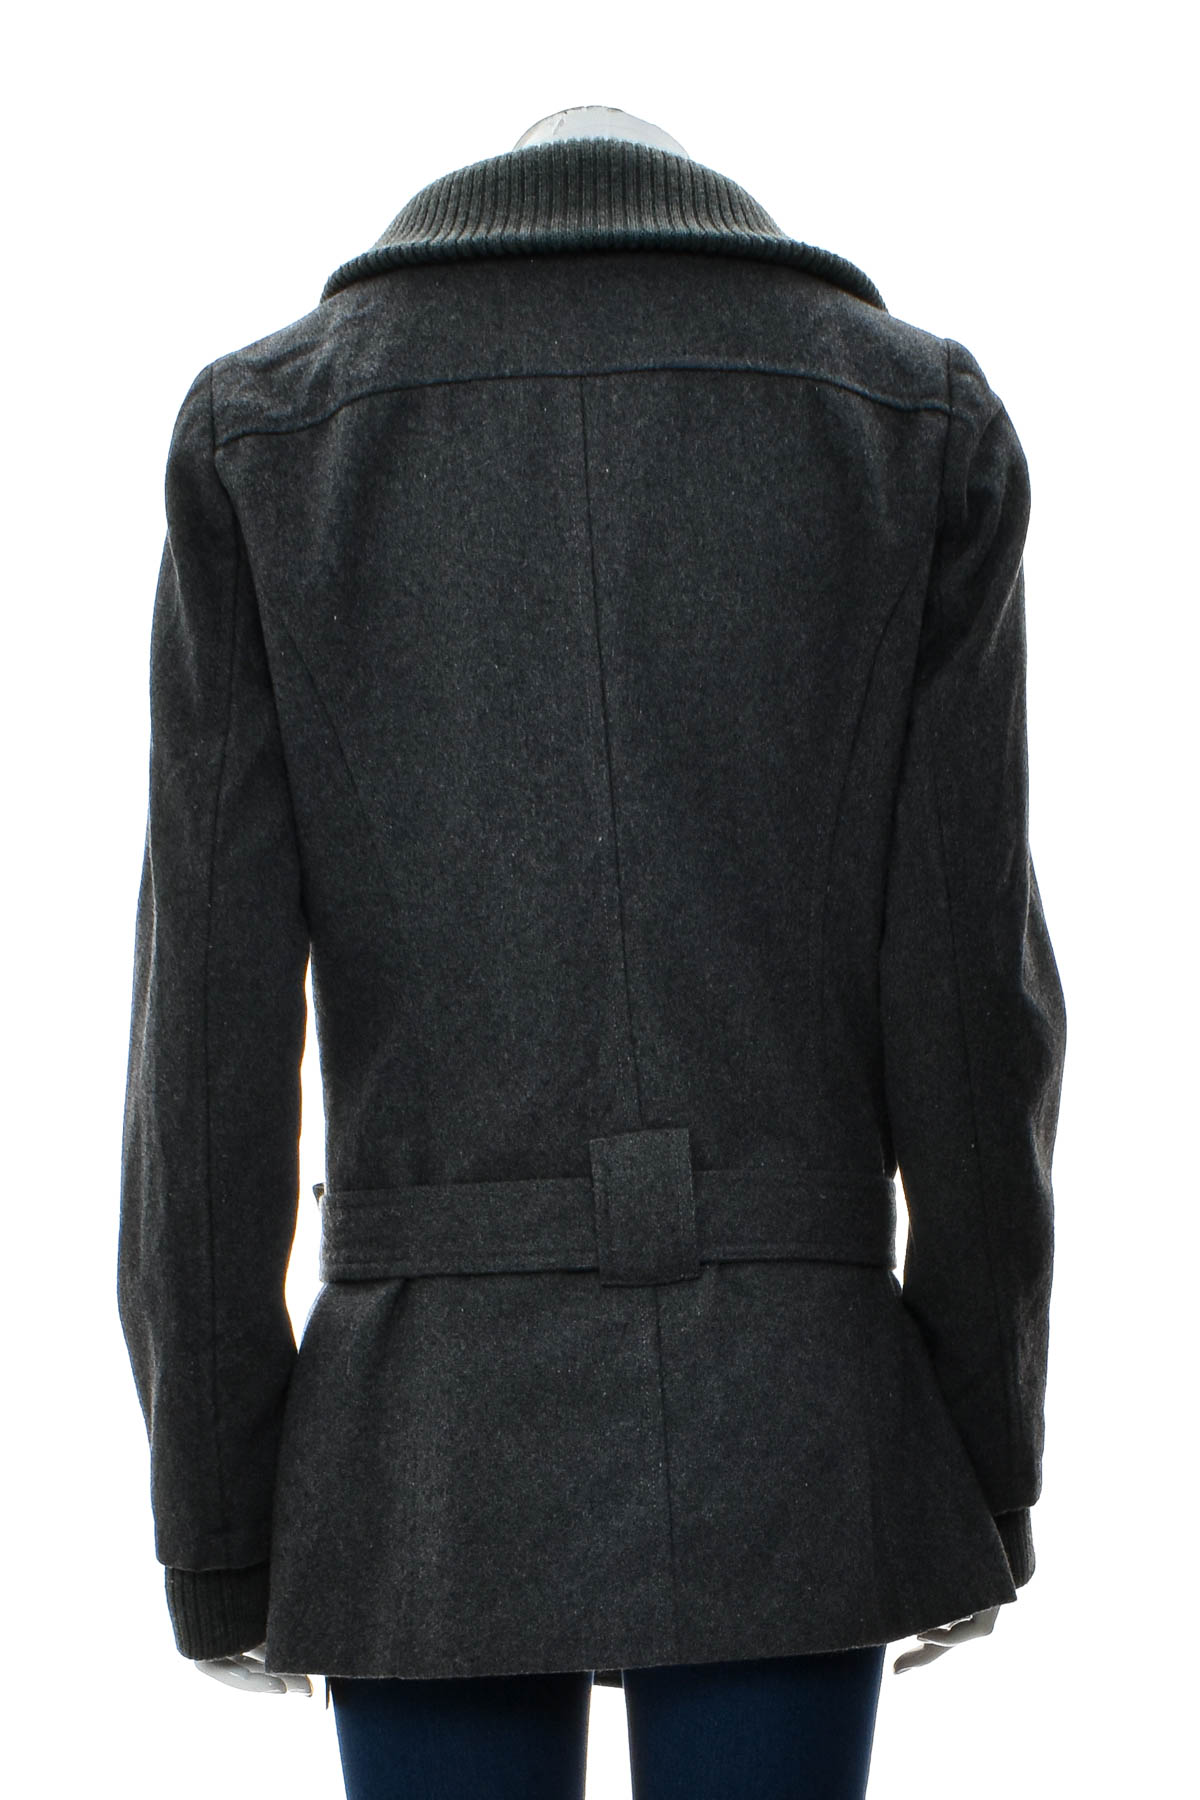 Women's coat - Pimkie - 1